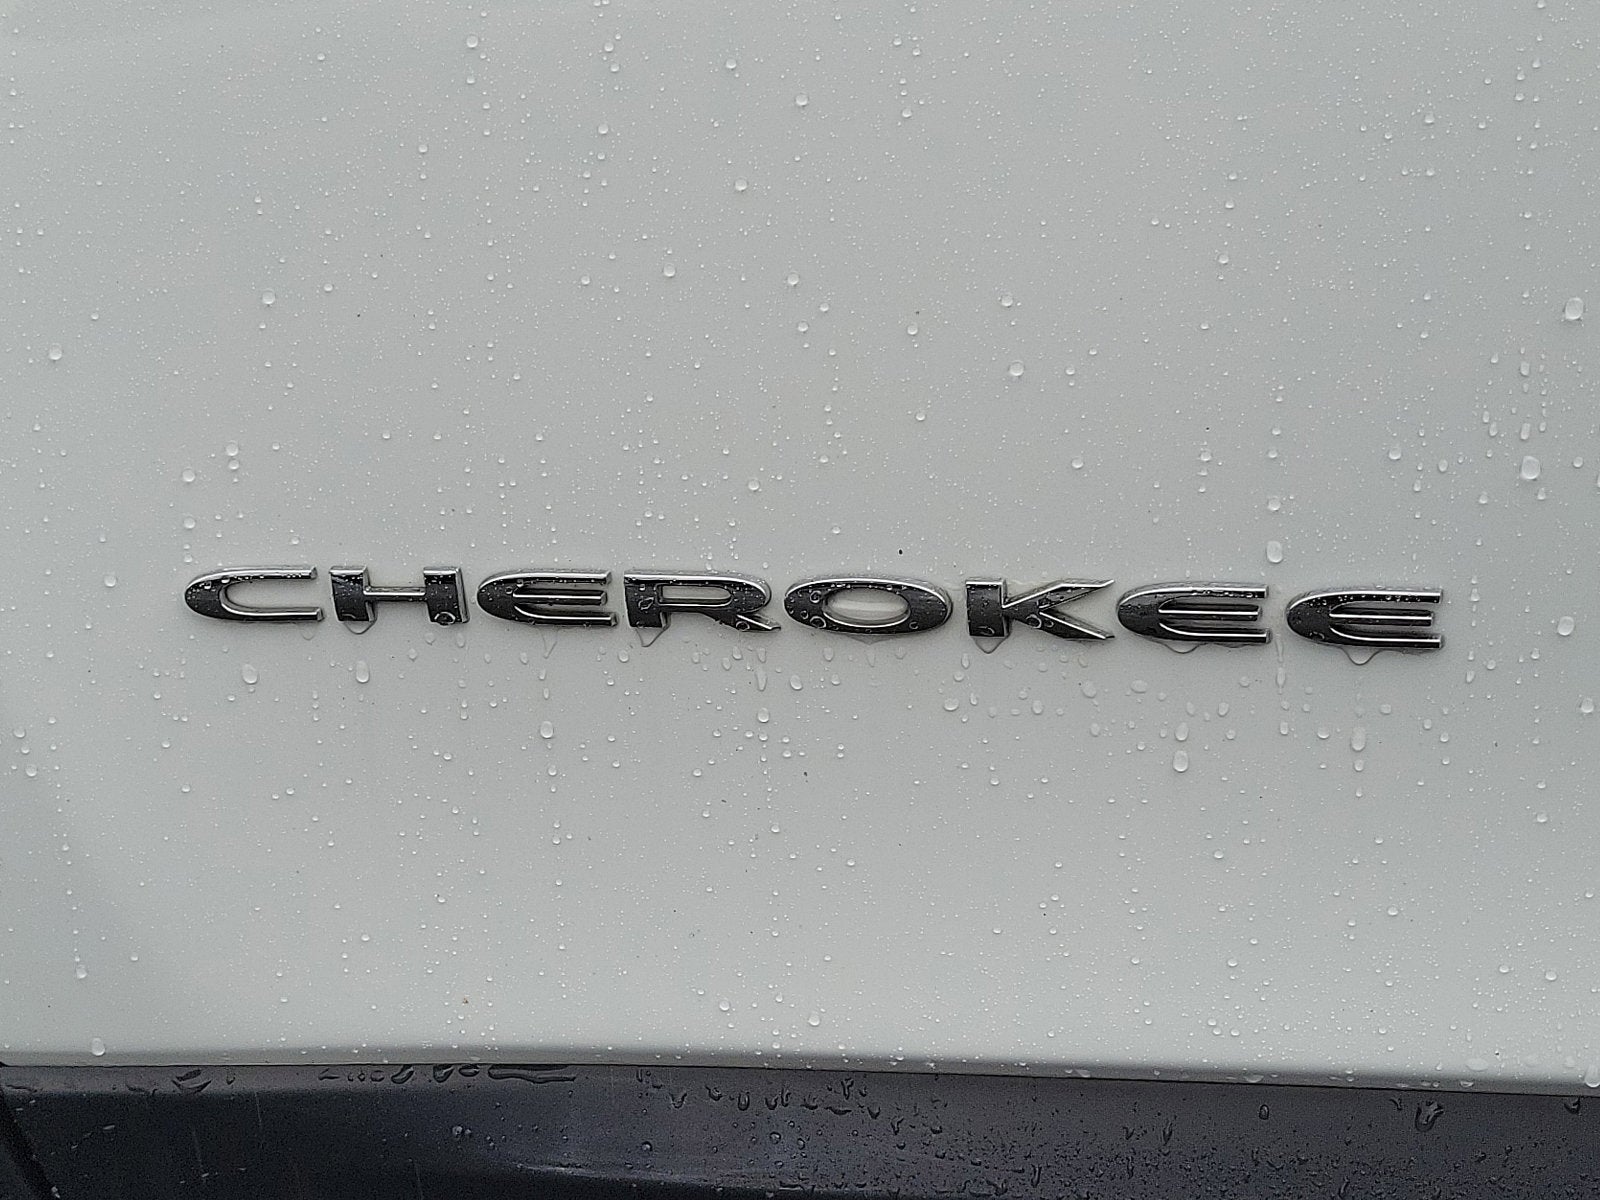 2020 Jeep Cherokee Latitude